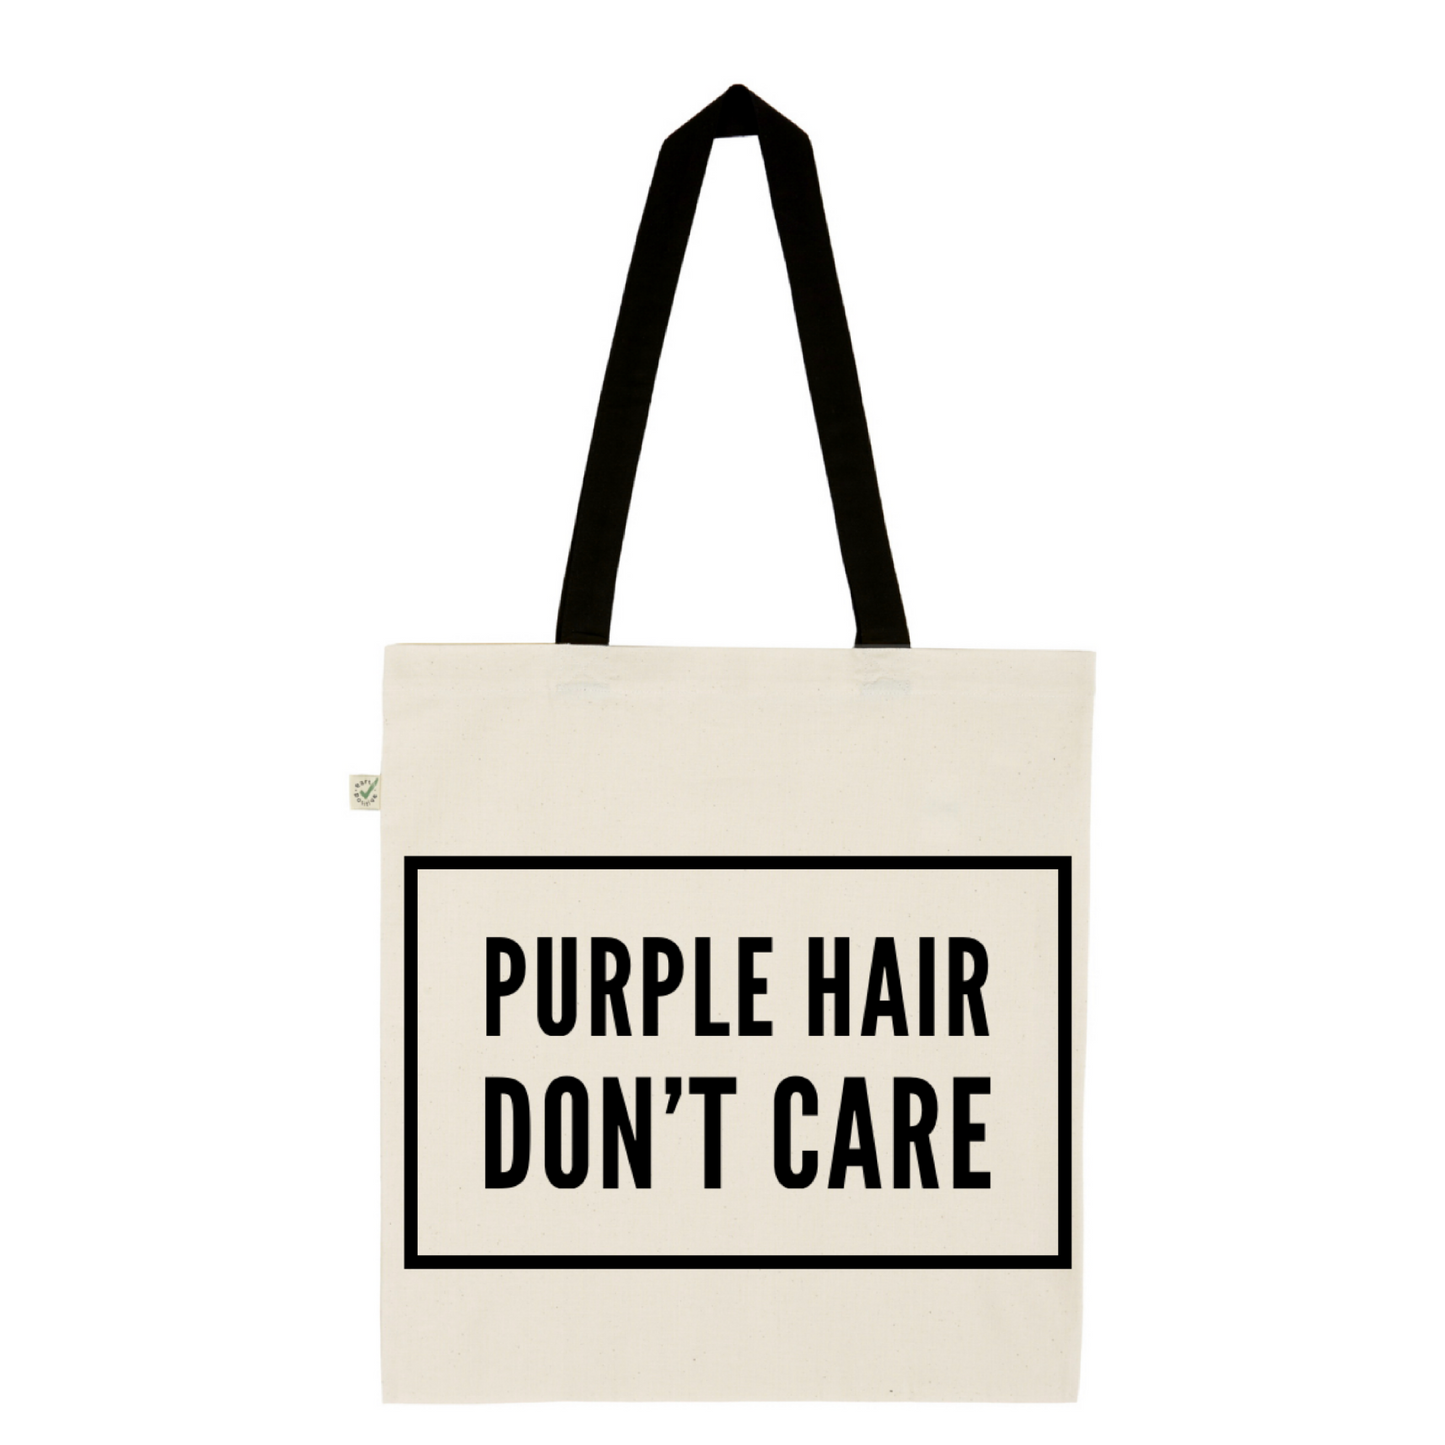 Purple hair don’t care - 100% organic tote